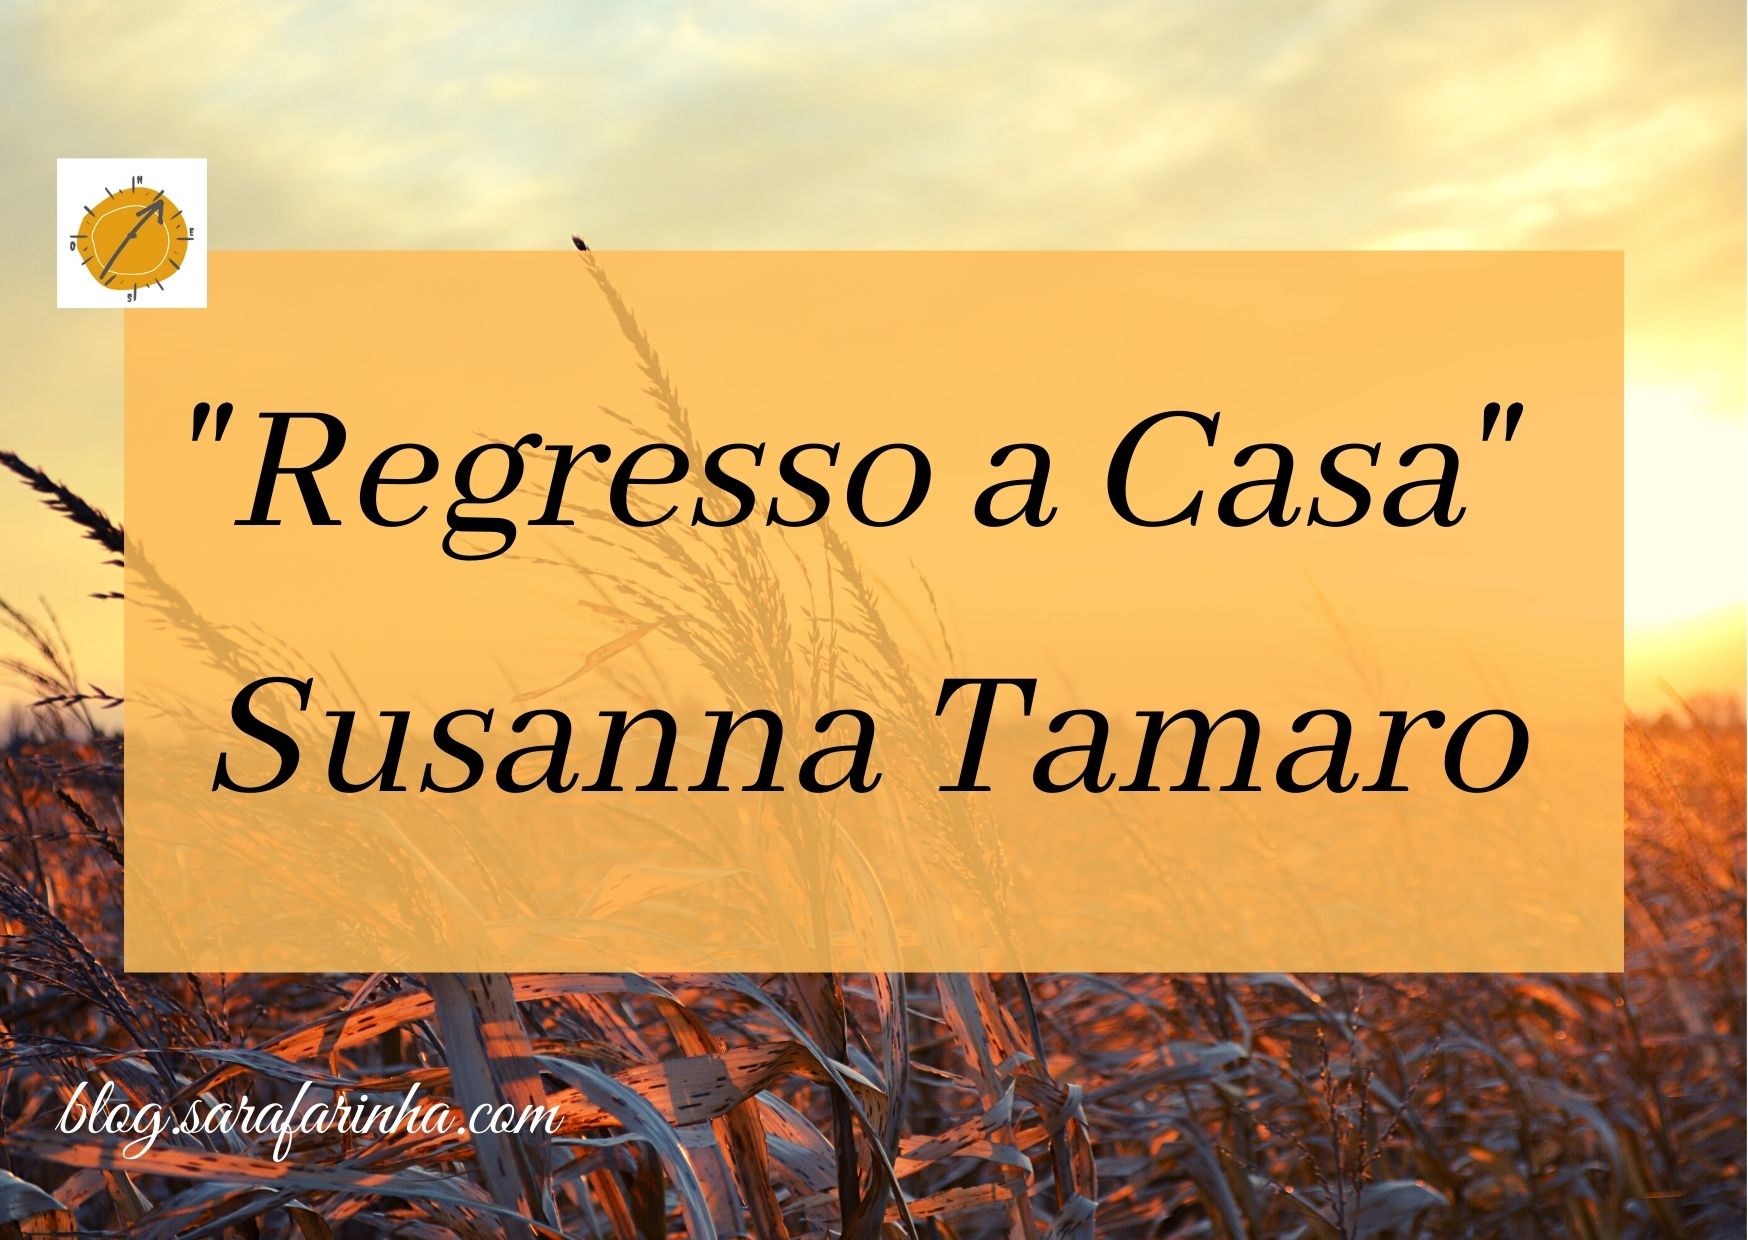 Susanna Tamaro